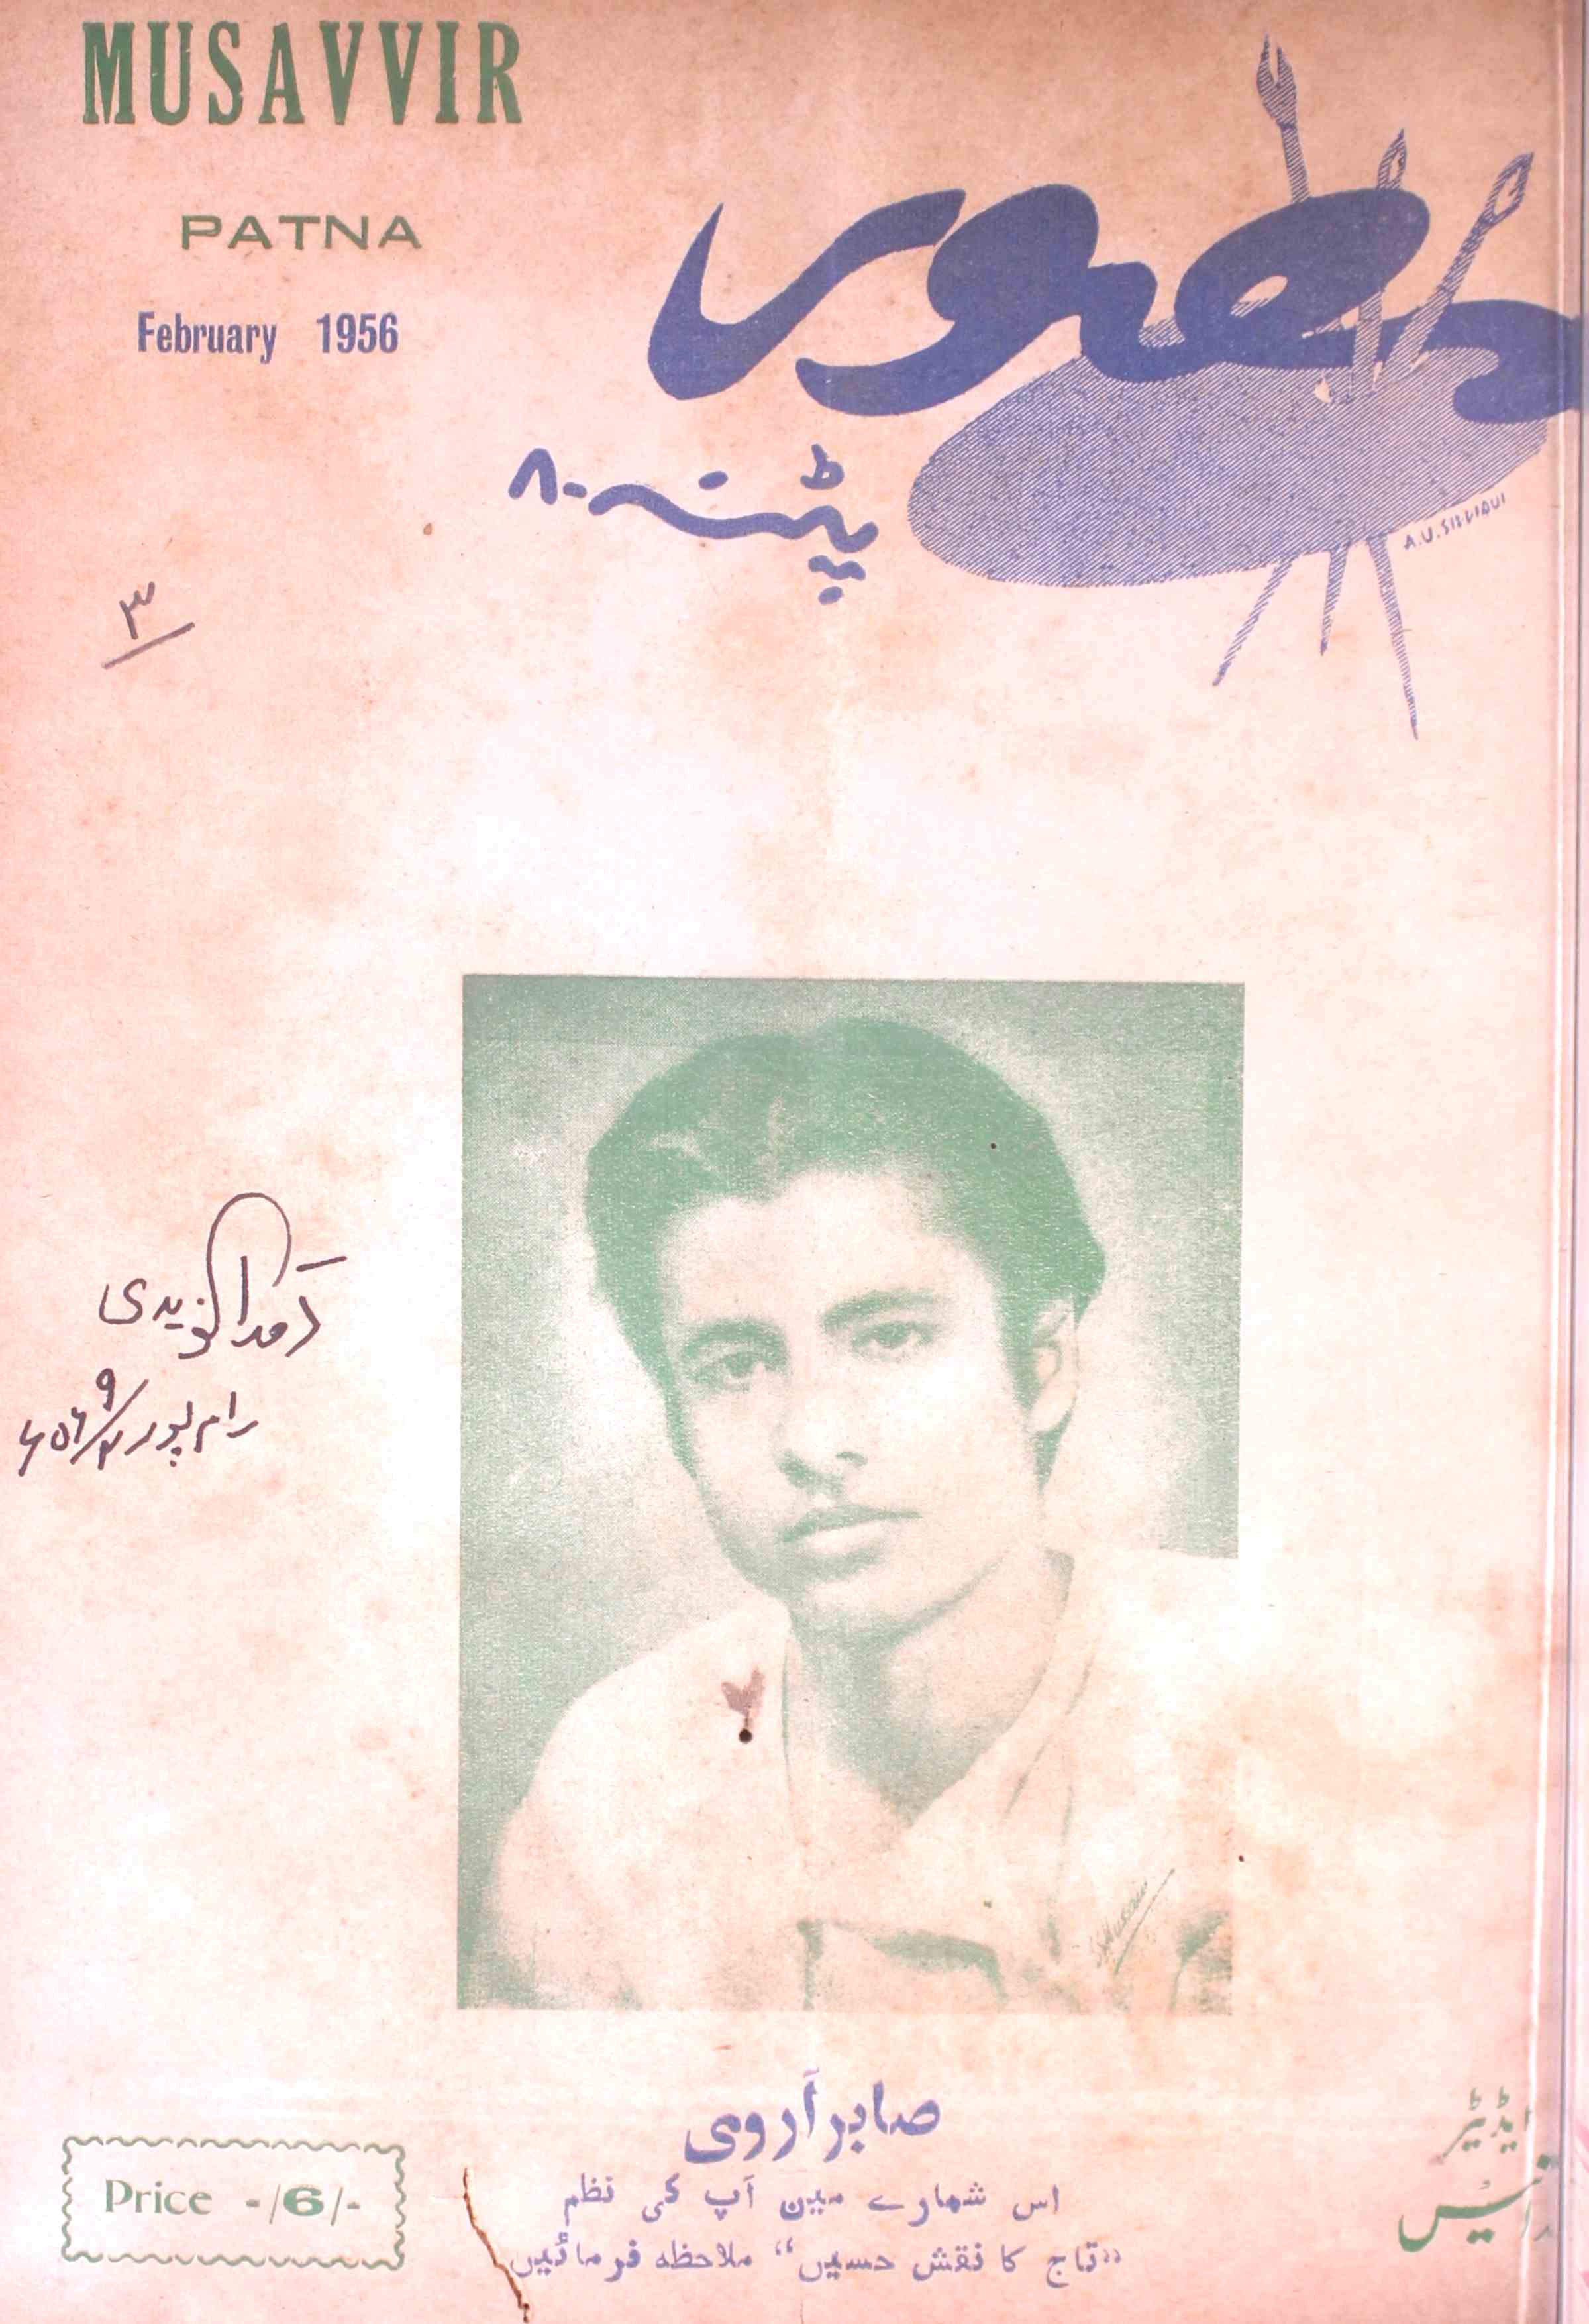 Musawwir Jild 2 No. 2 - Feb. 1956